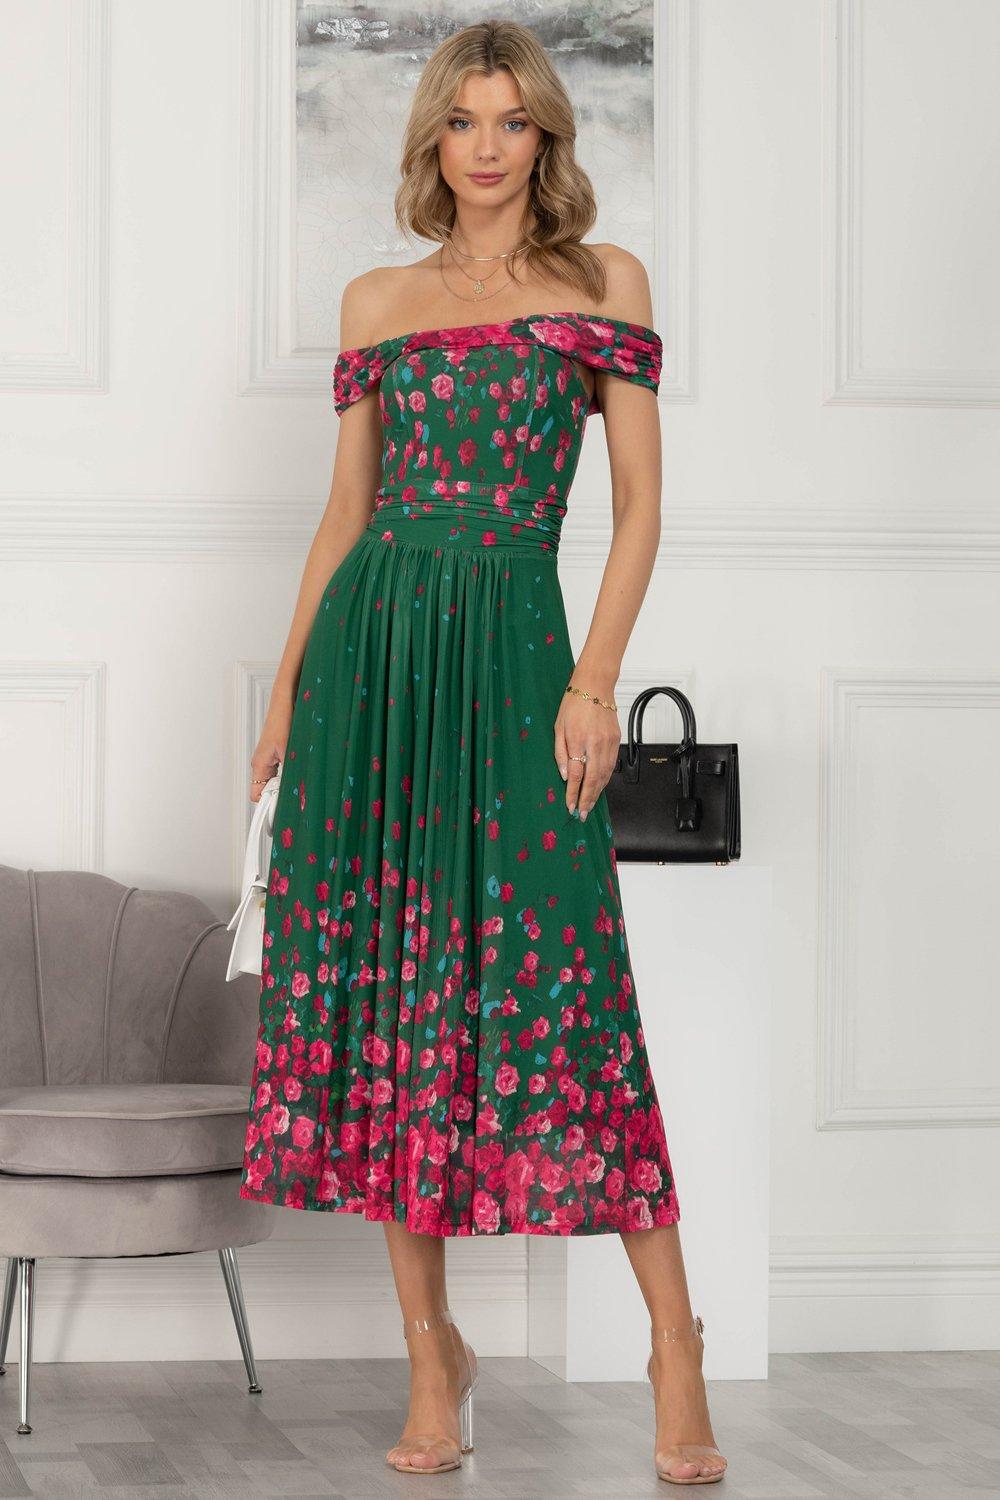 Oliana Mesh Bardot Neckline Dress